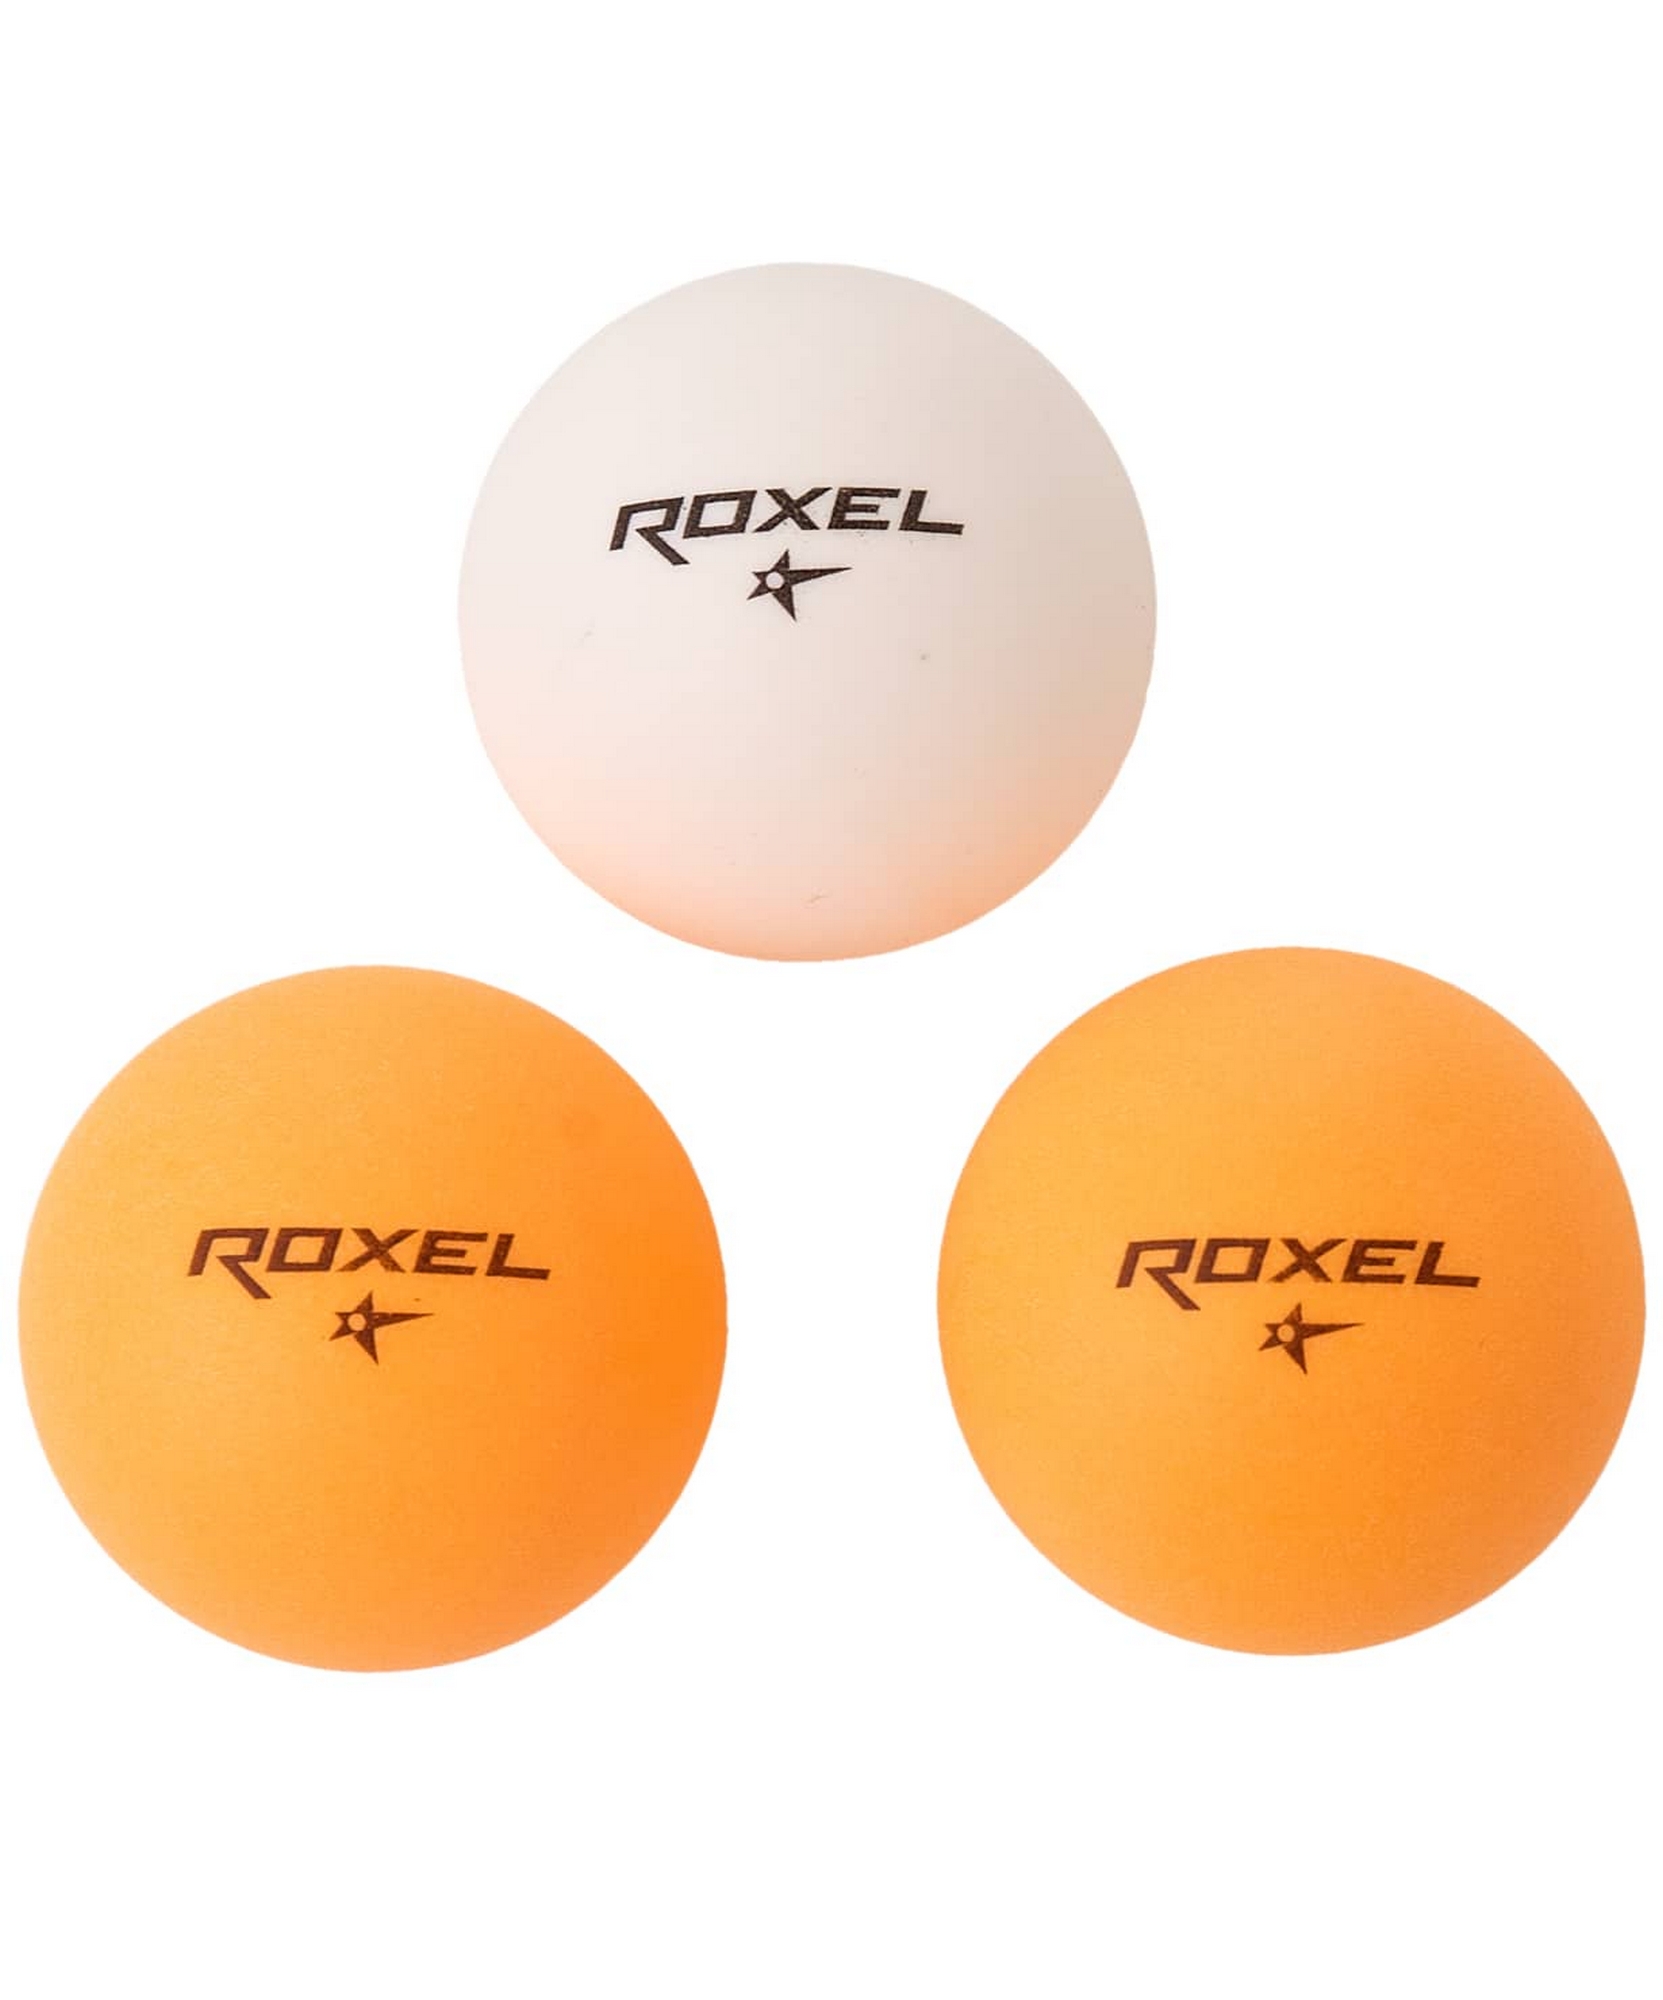 Набор для настольного тенниса Roxel Admirer, 2 ракетки, 3 мяча, сетка, чехол 1663_2000